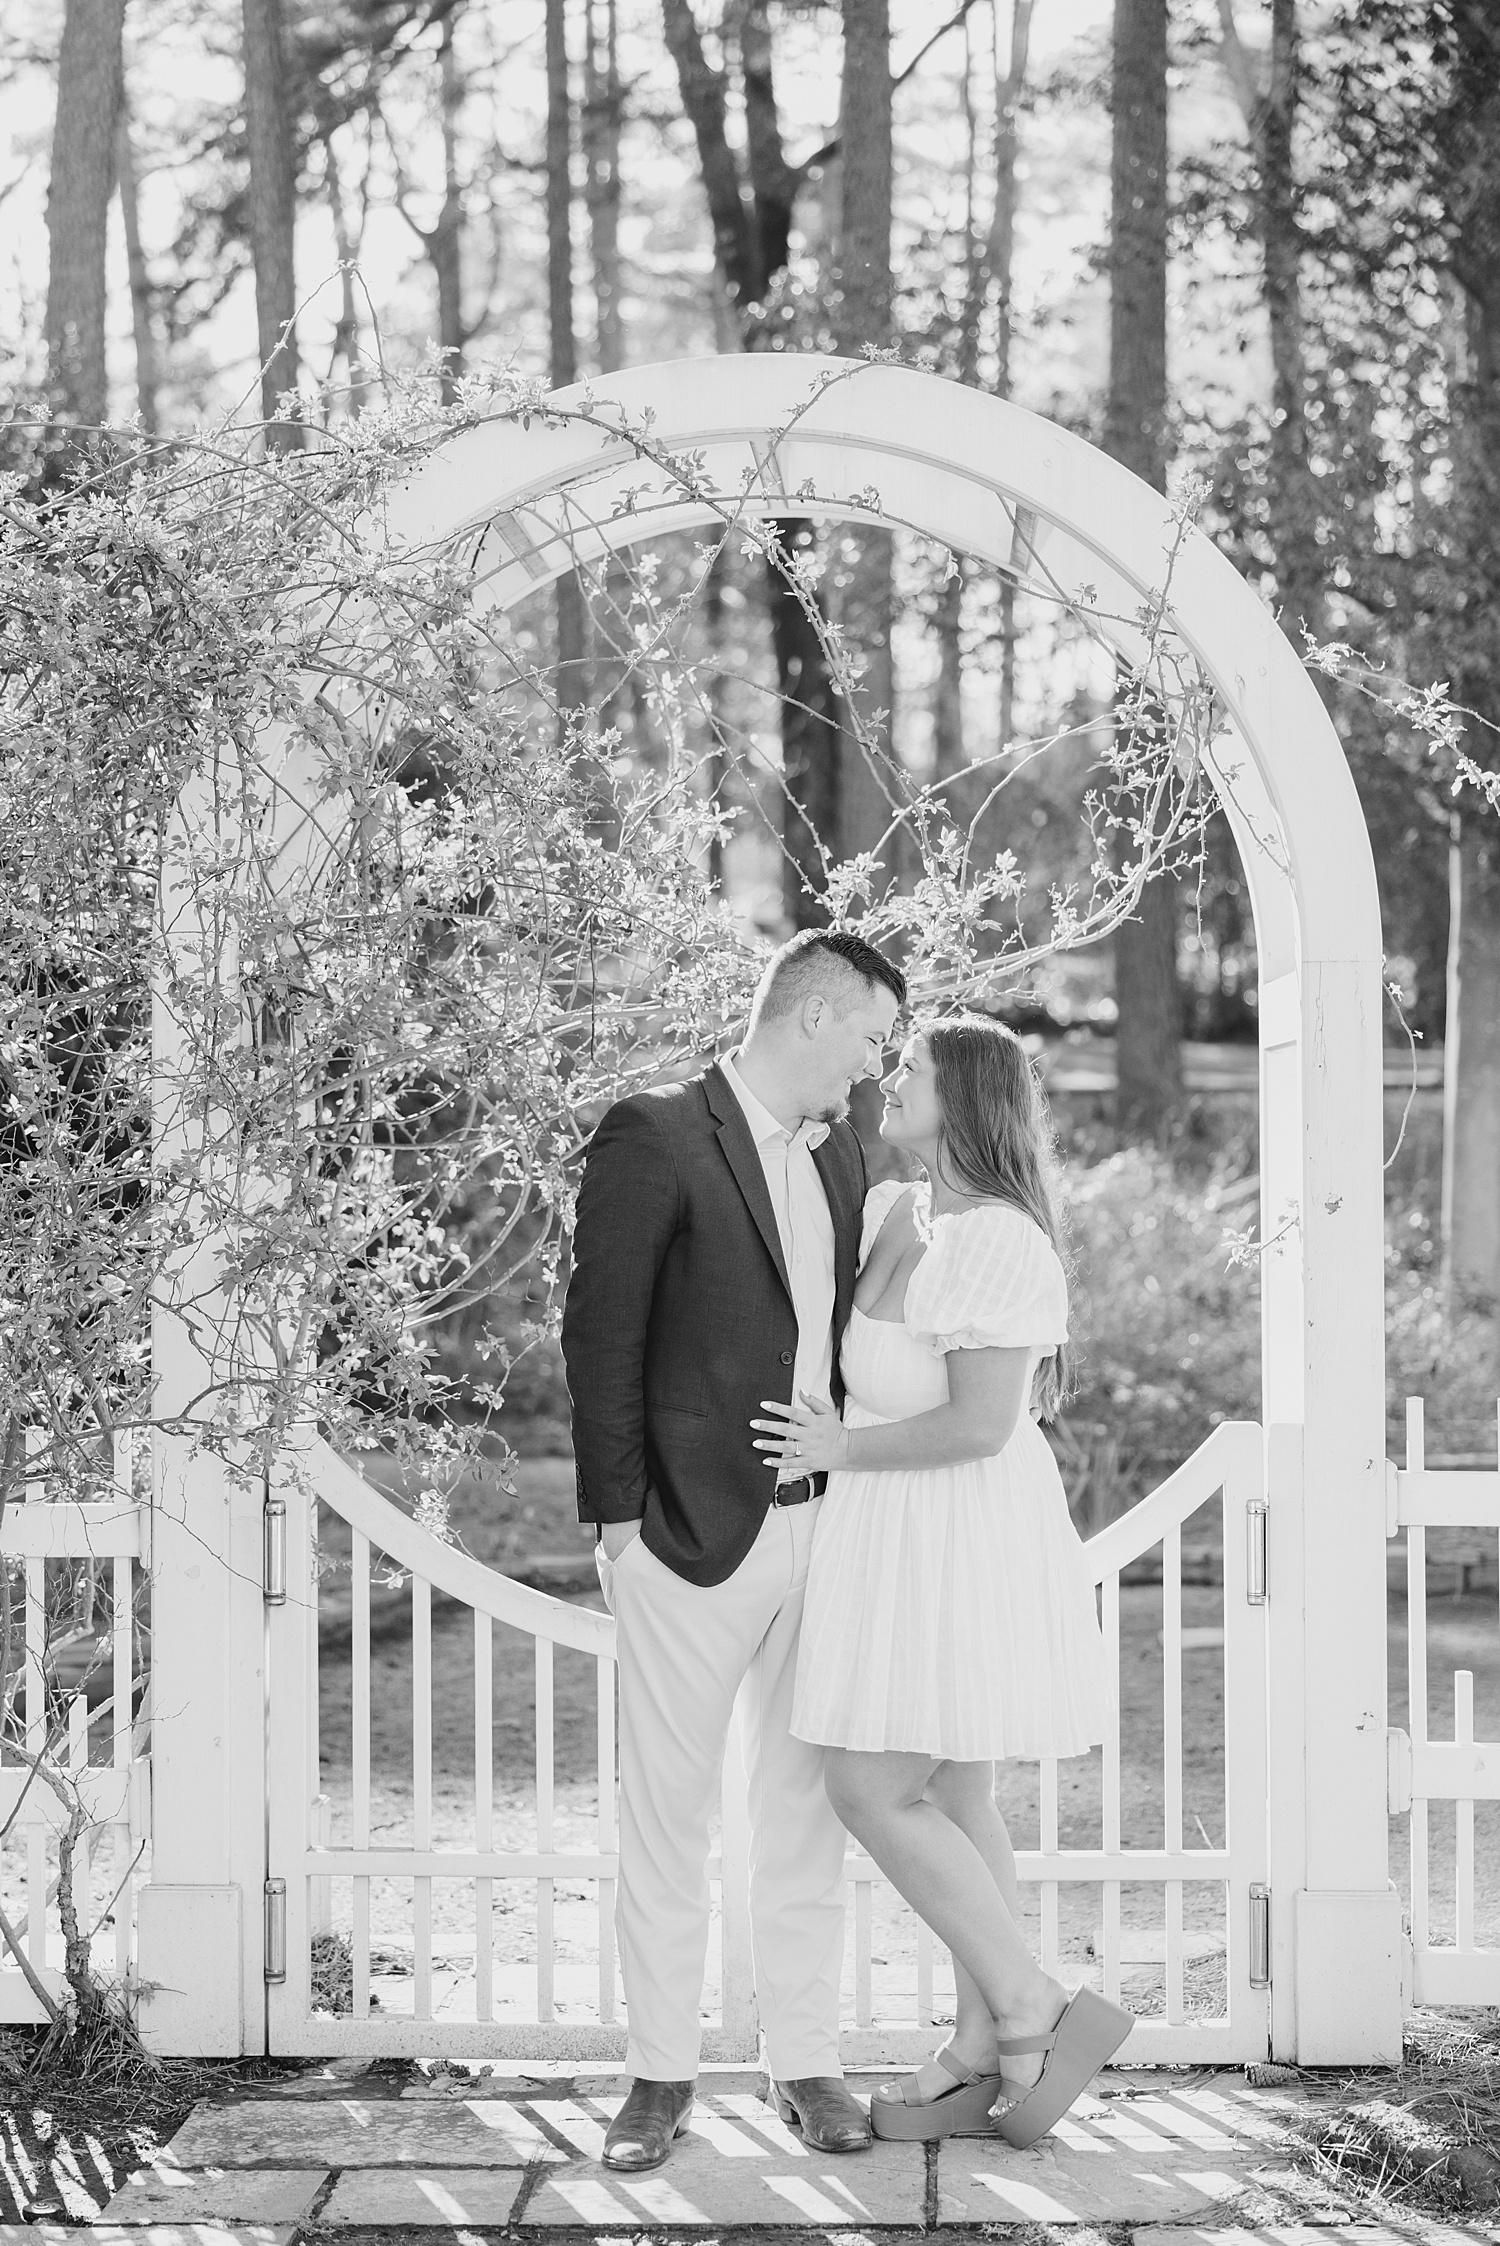 Birmingham Botanical Garden engagement photo in black and white